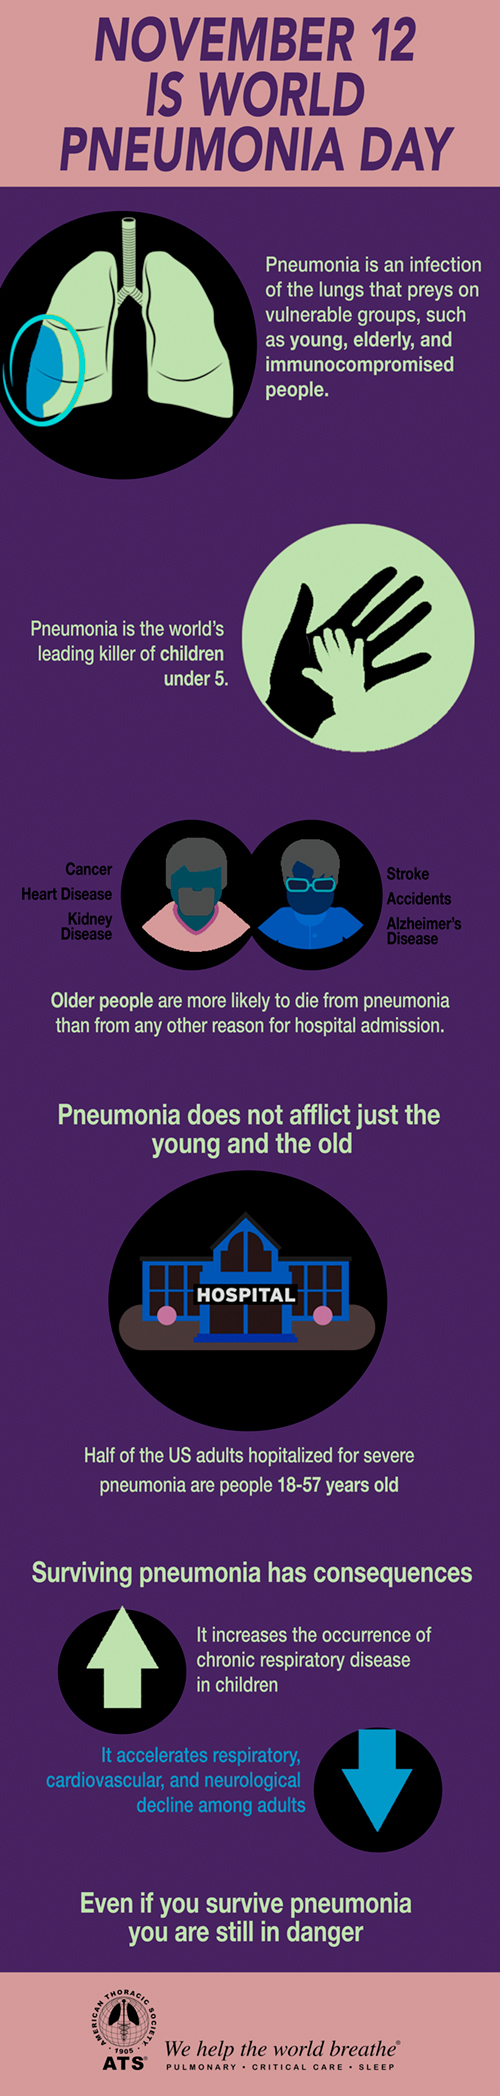 World Pneumonia Day 2017